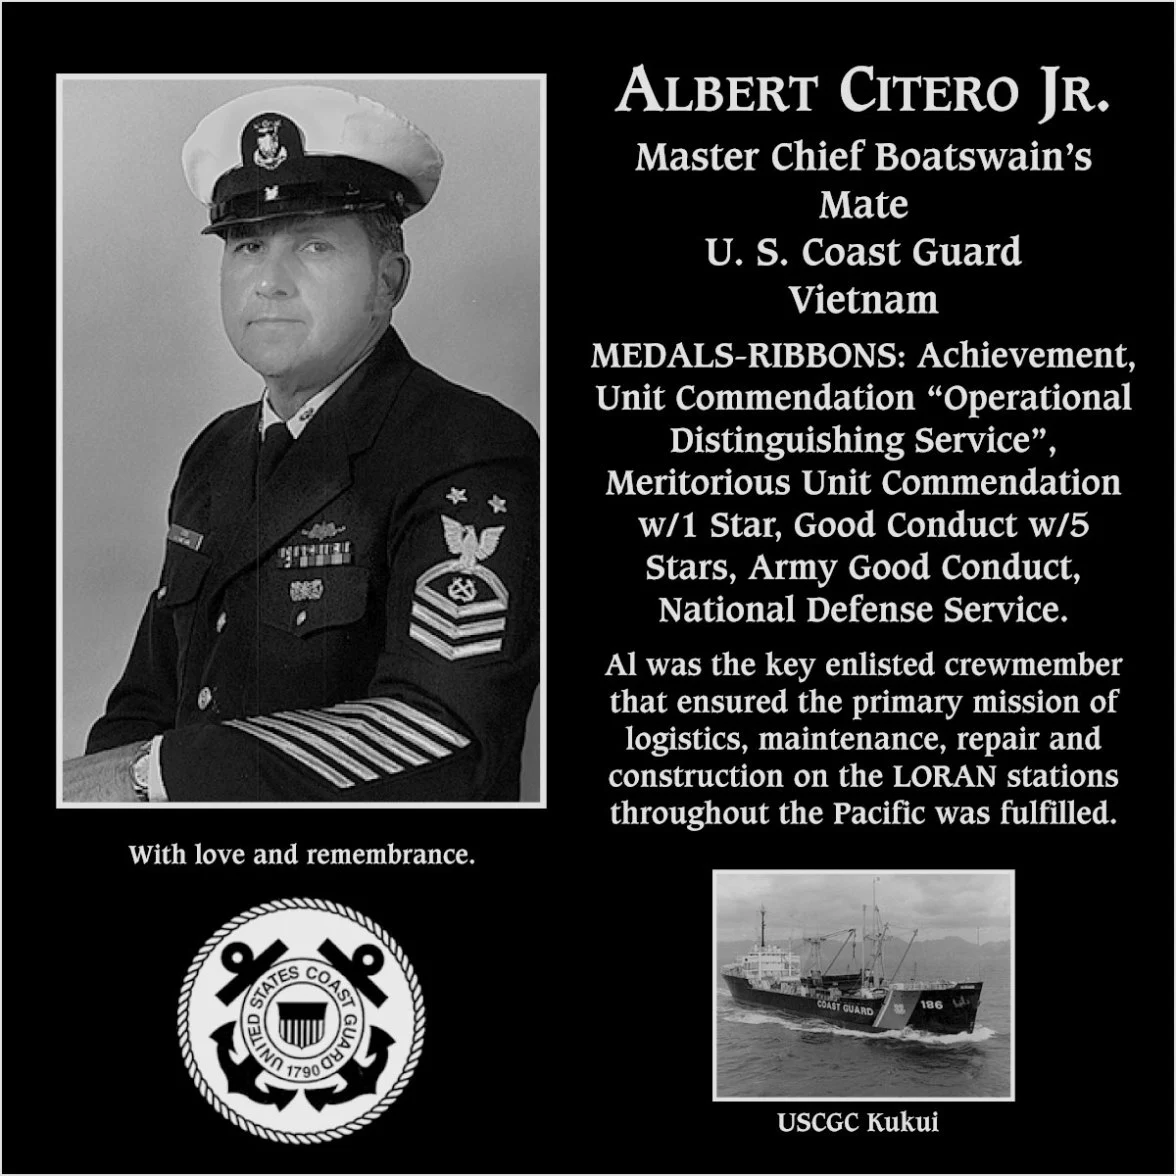 Albert Citero, jr